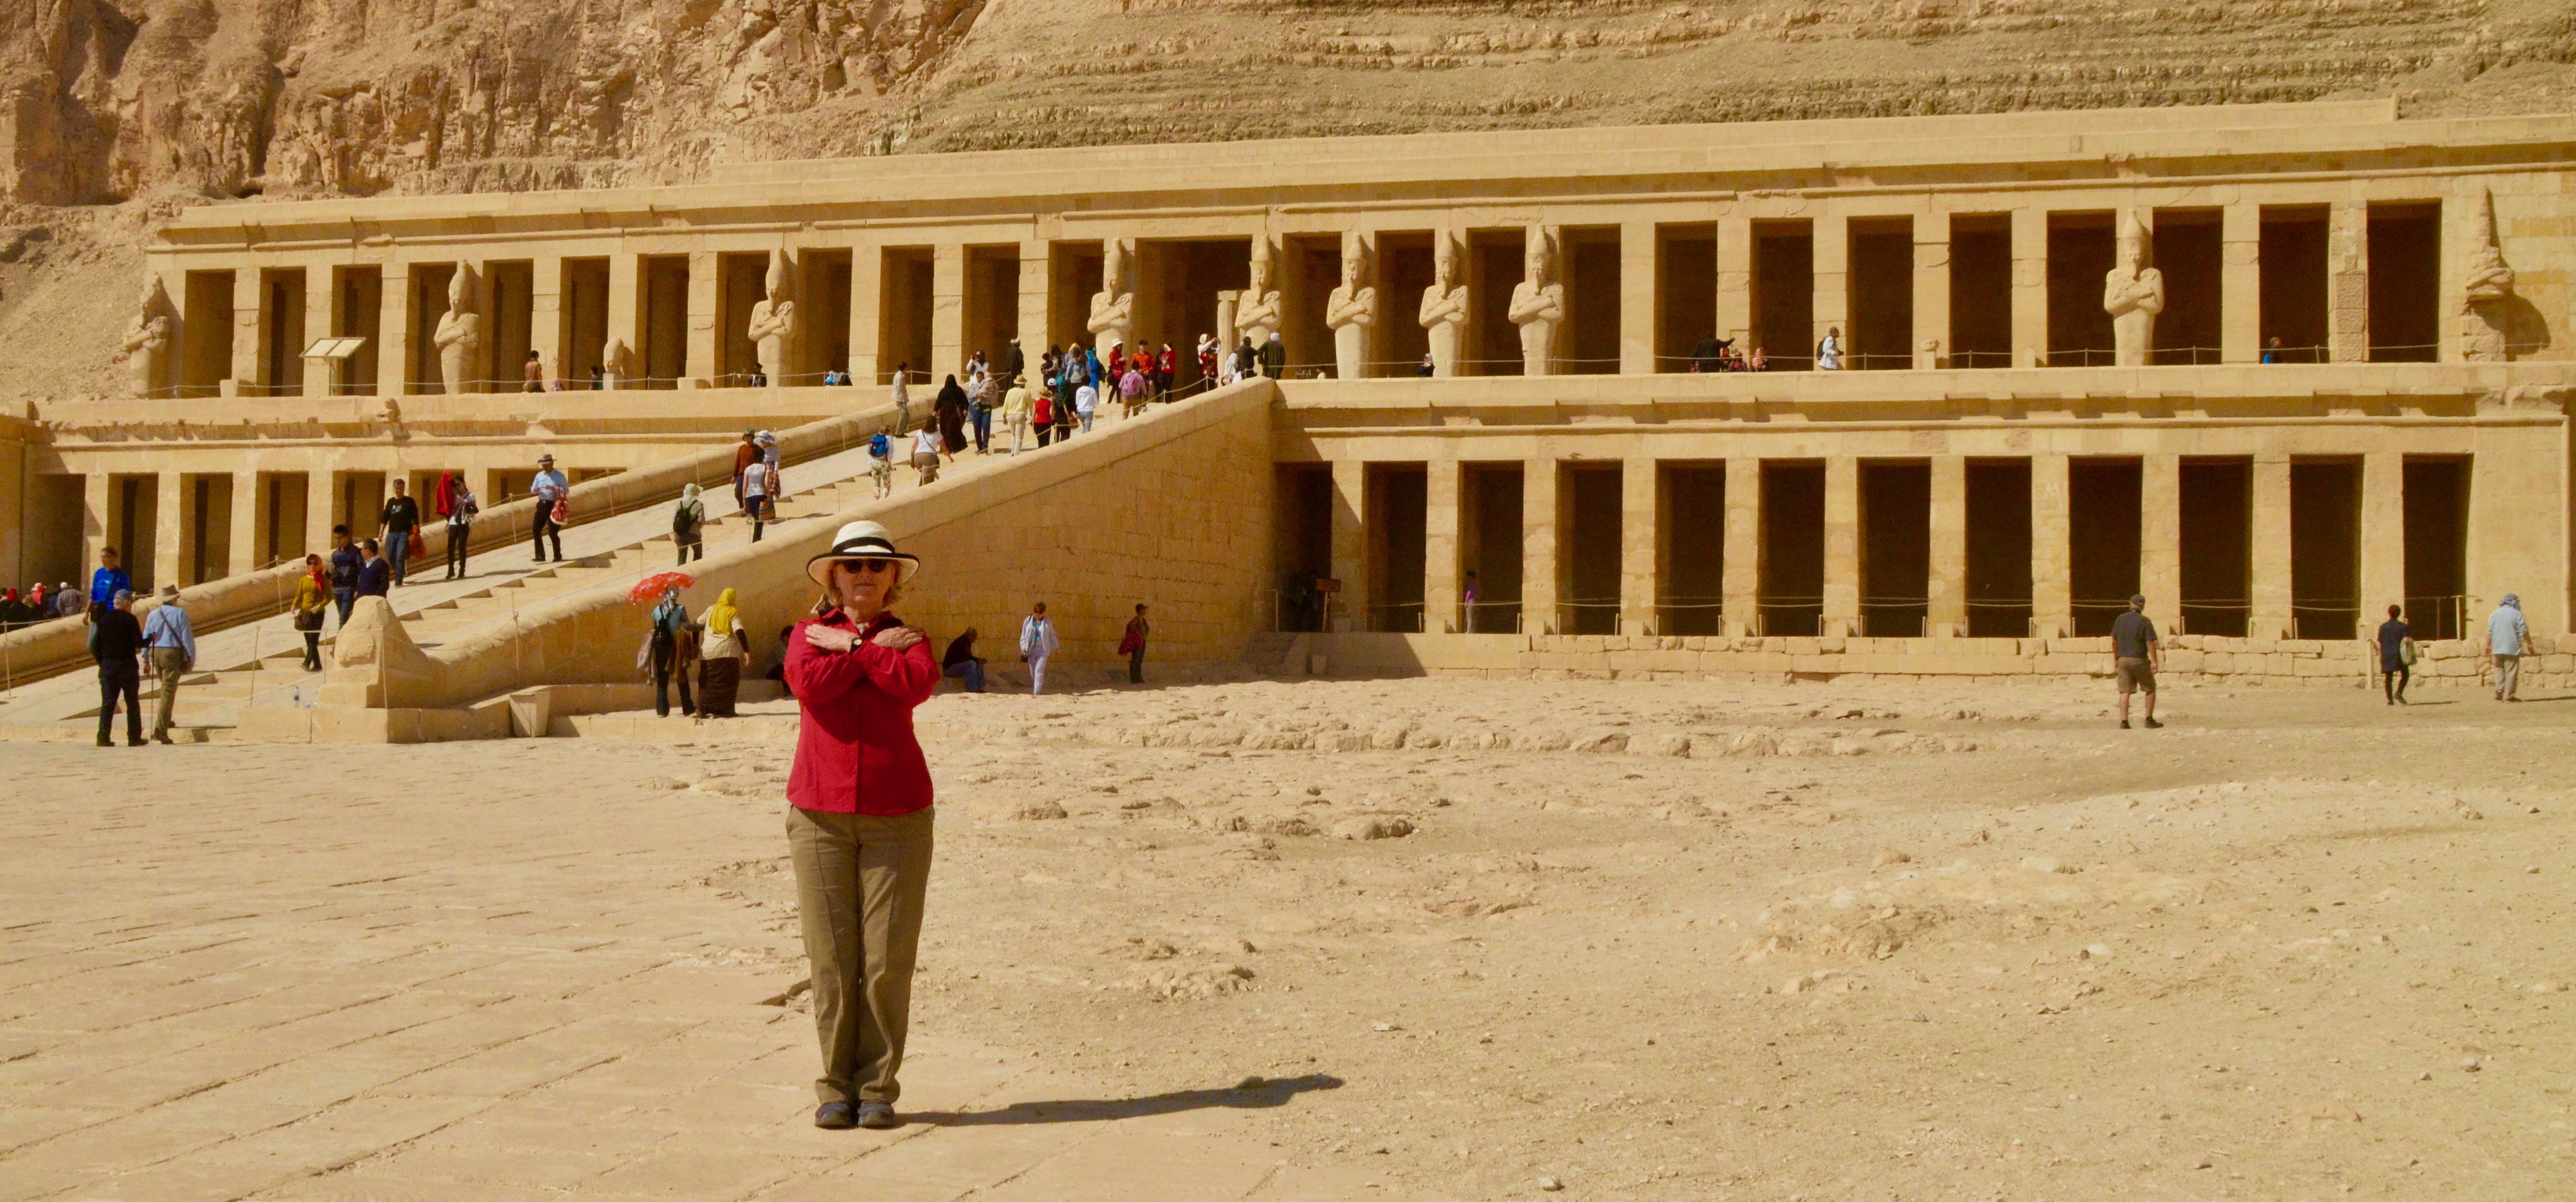 Alison as Hatshepsut